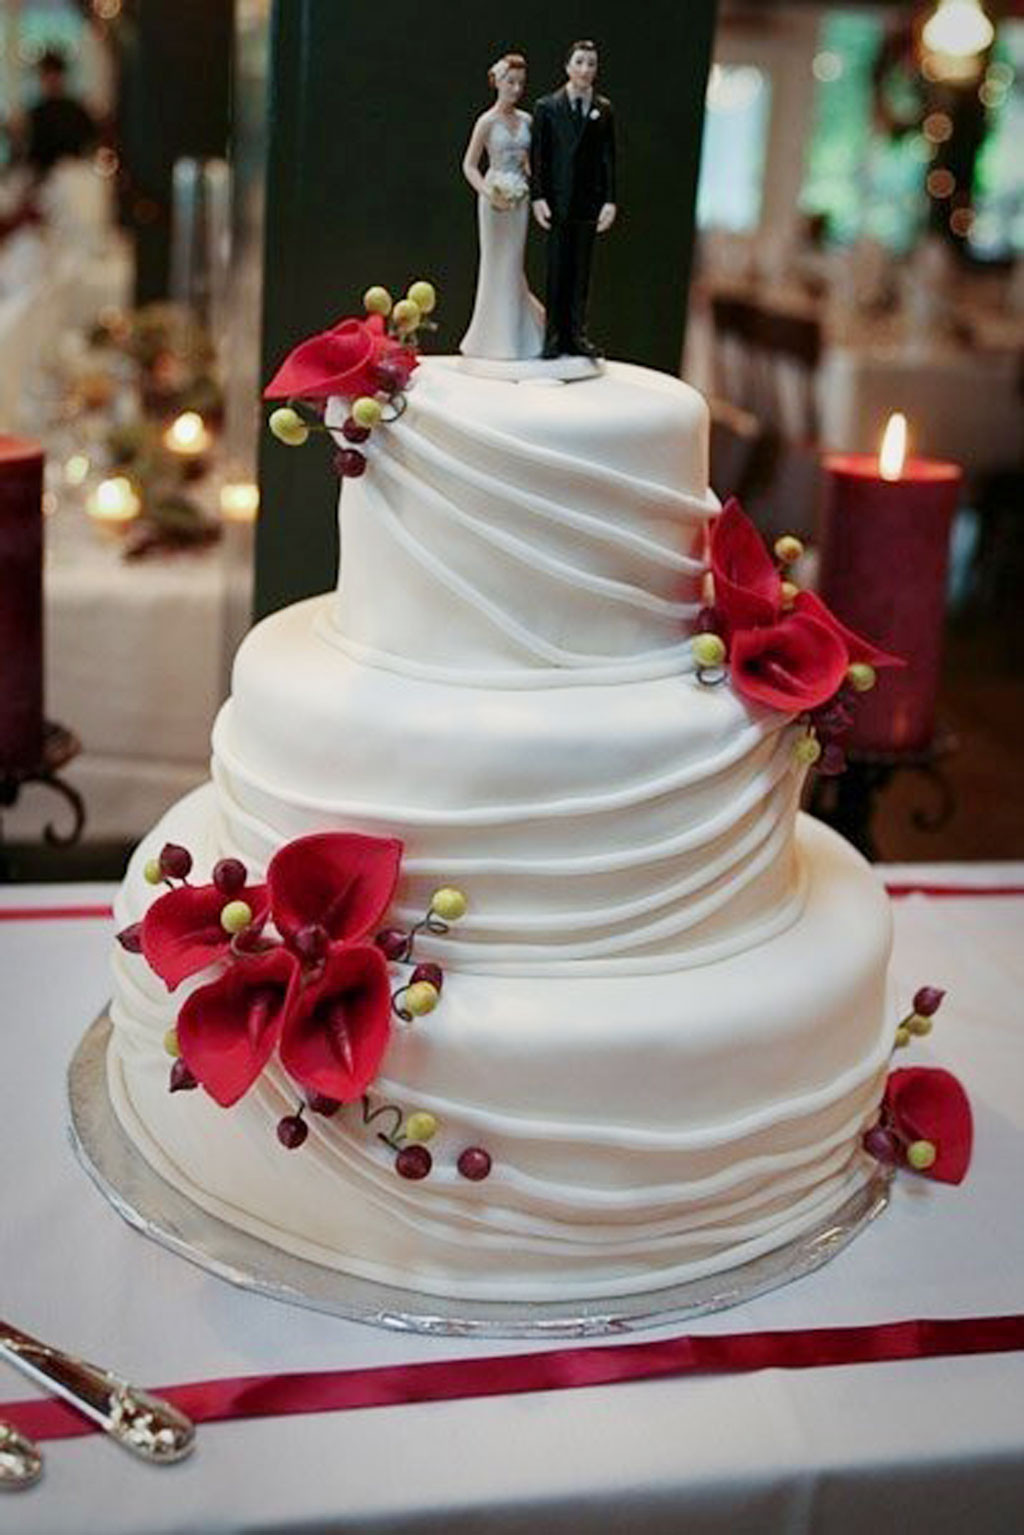 Wedding Cakes Designs
 Red Calla Lily Wedding Cake Design 2 Wedding Cake Cake